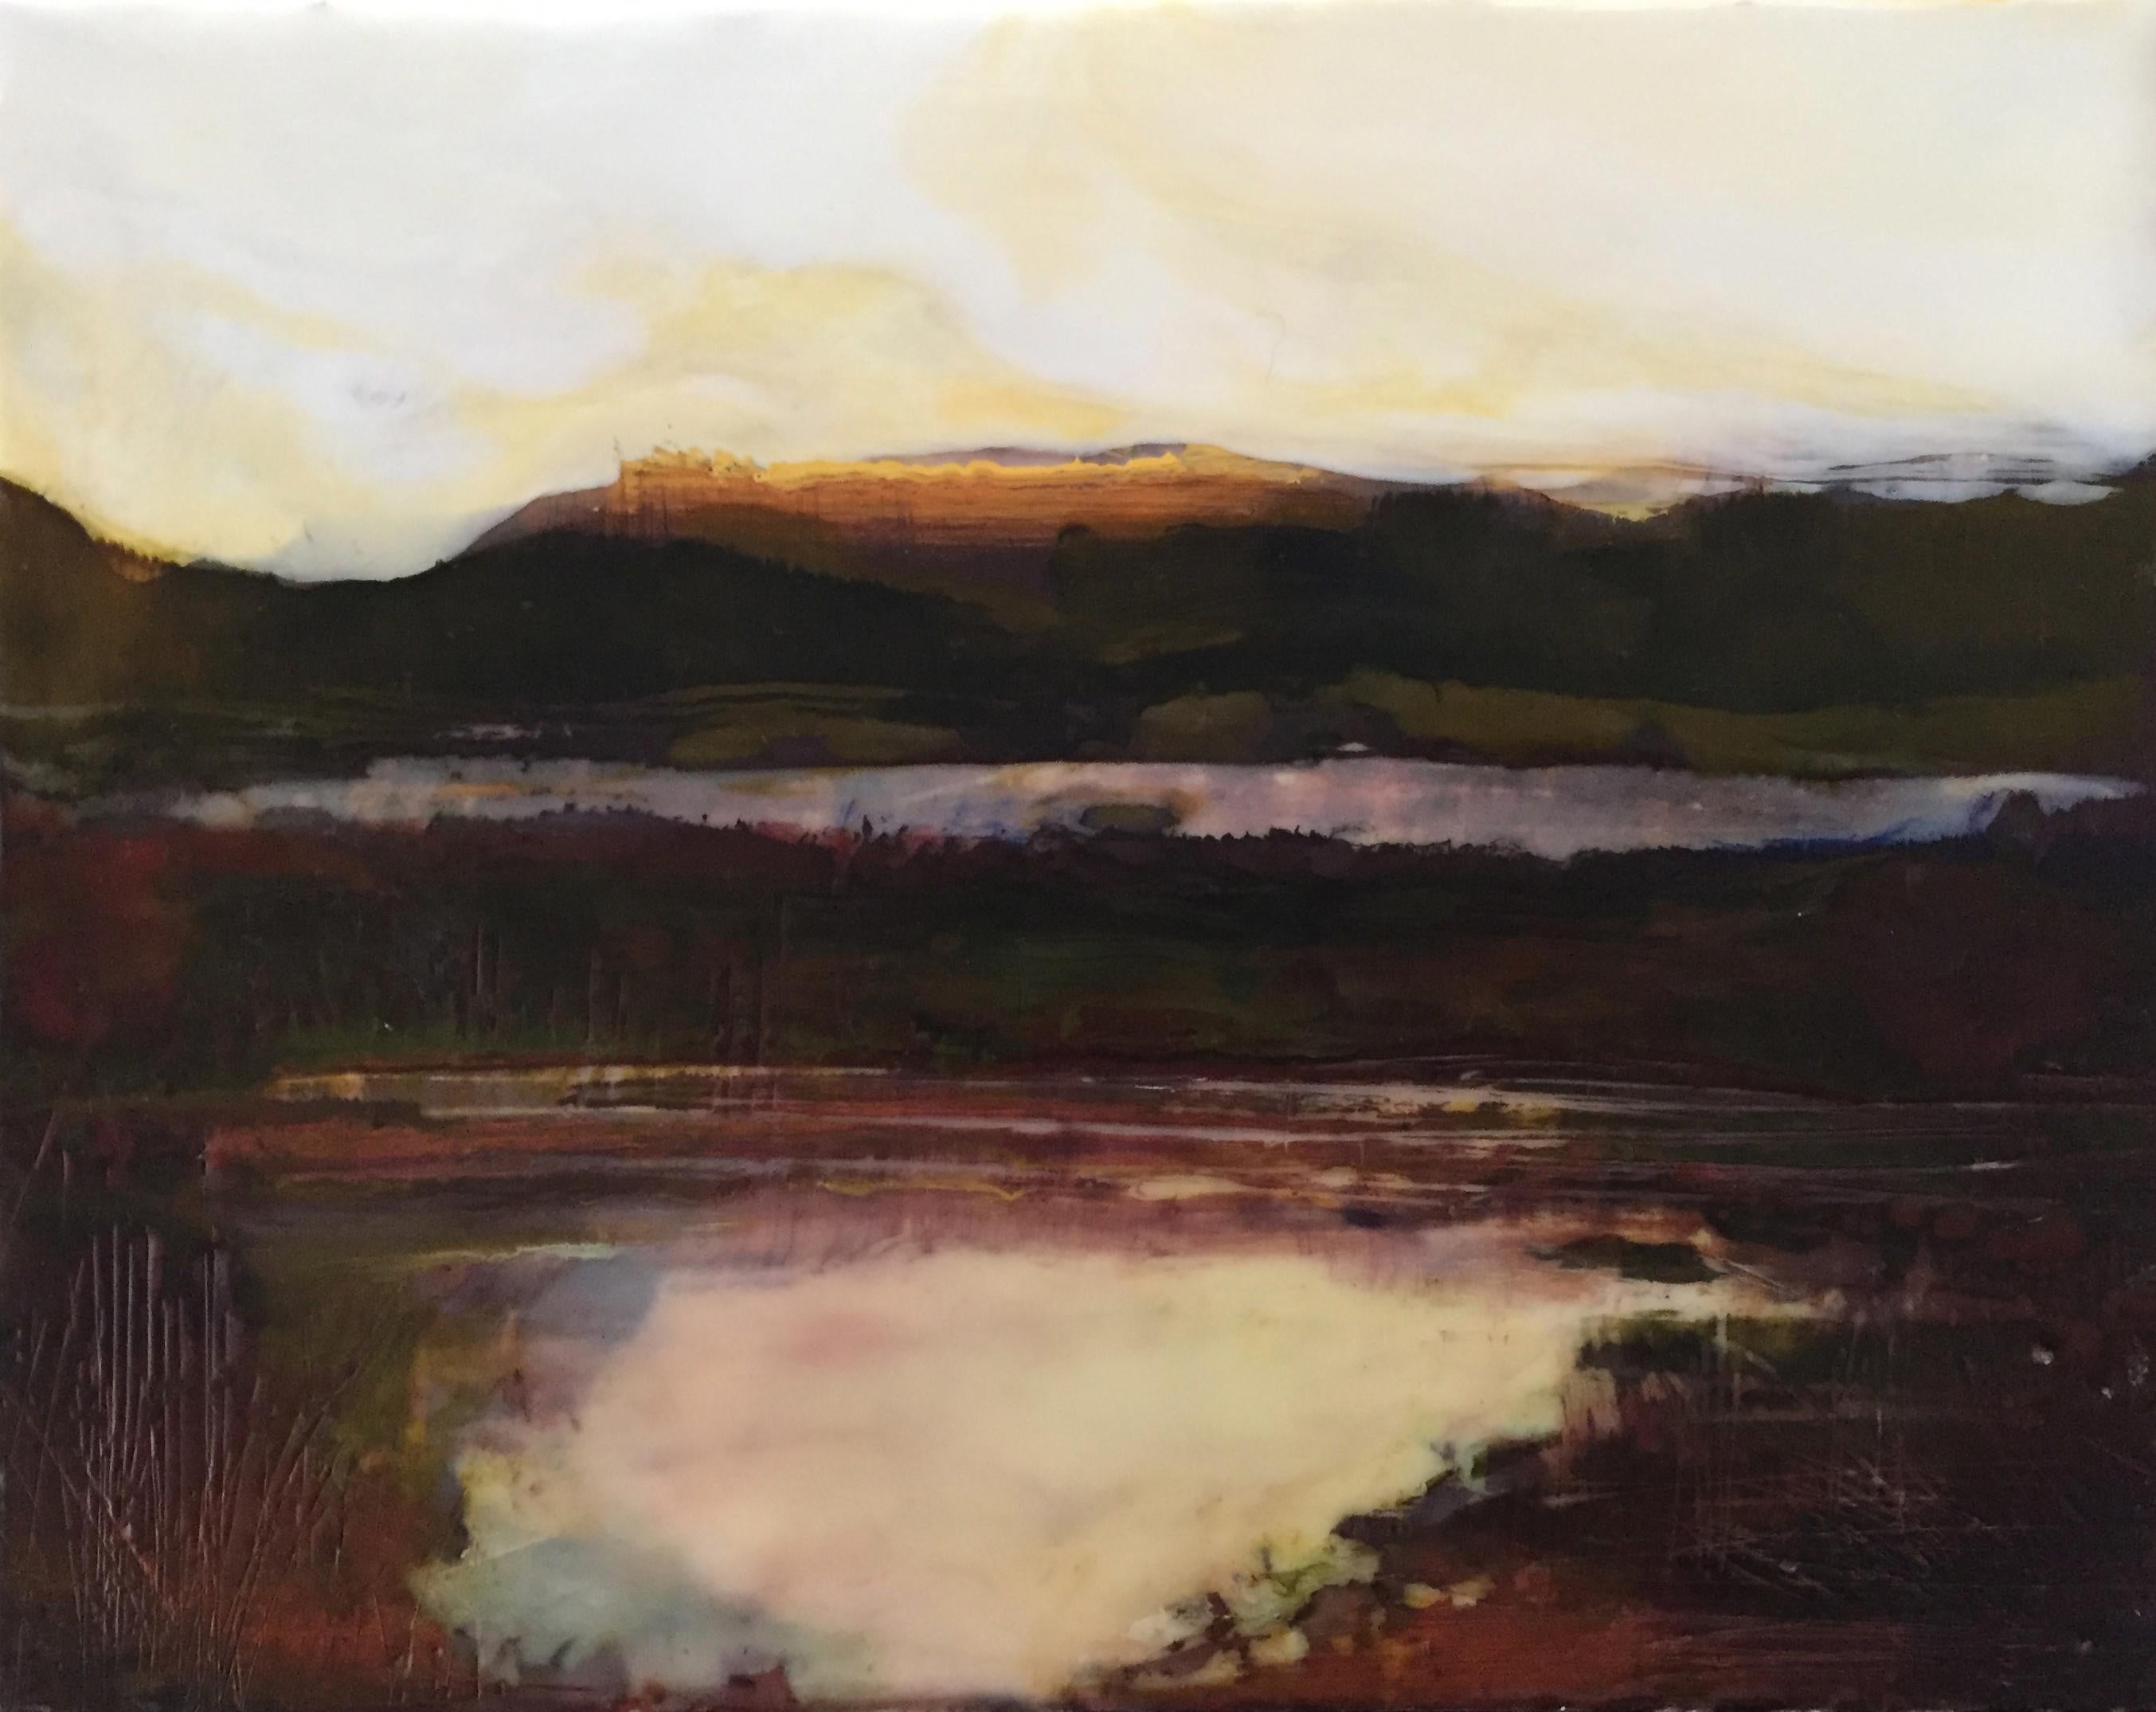 Regina Quinn  Landscape Painting - "Wetland at Dusk", oil painting, encaustic, landscape, sky, mountain, field pond